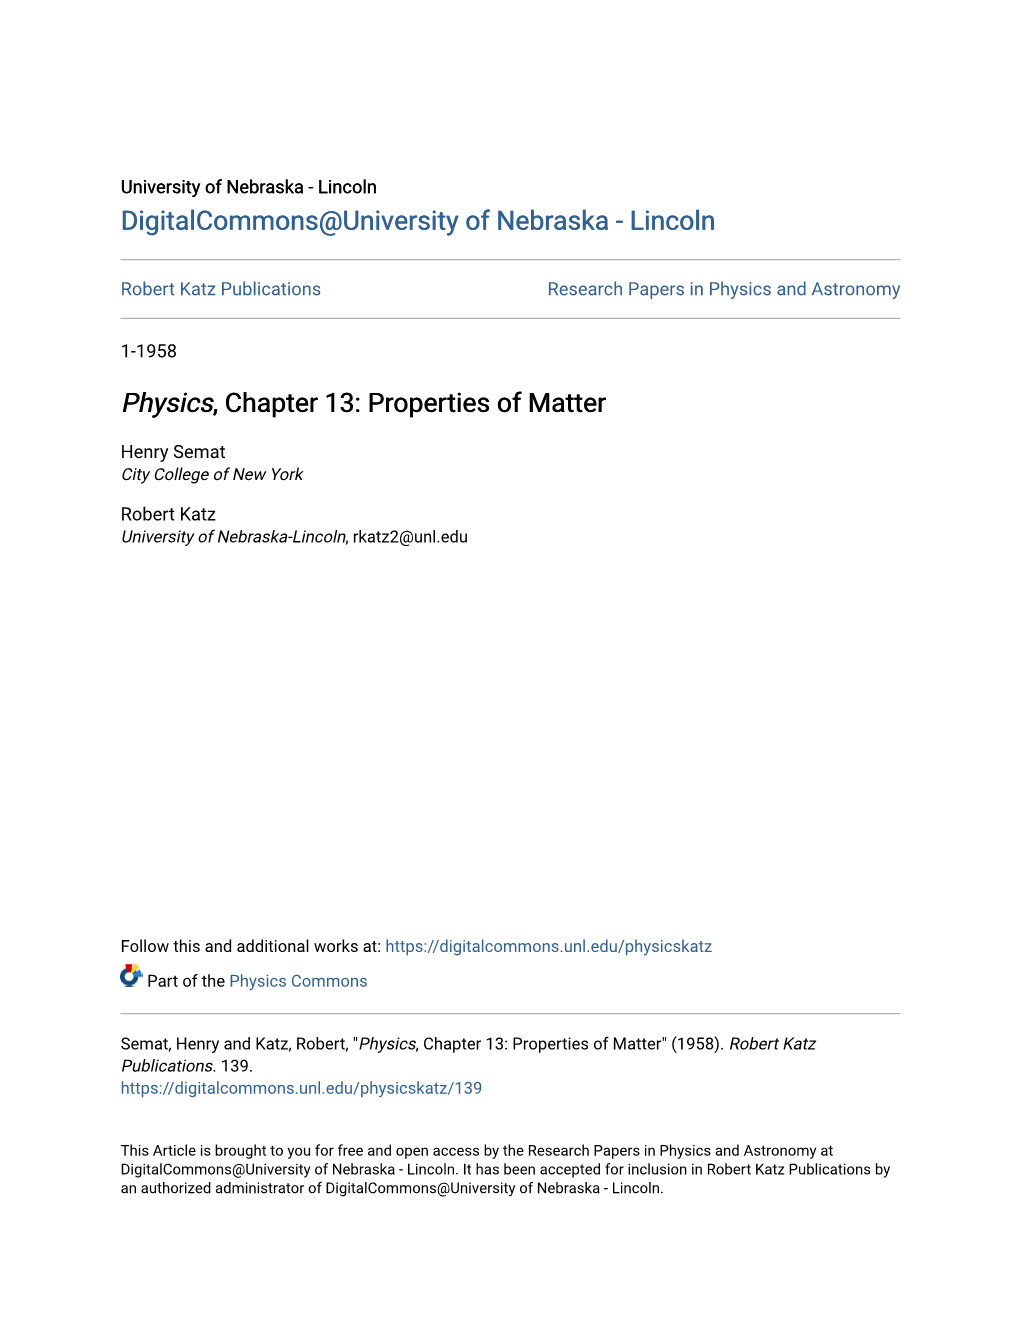 Physics, Chapter 13: Properties of Matter